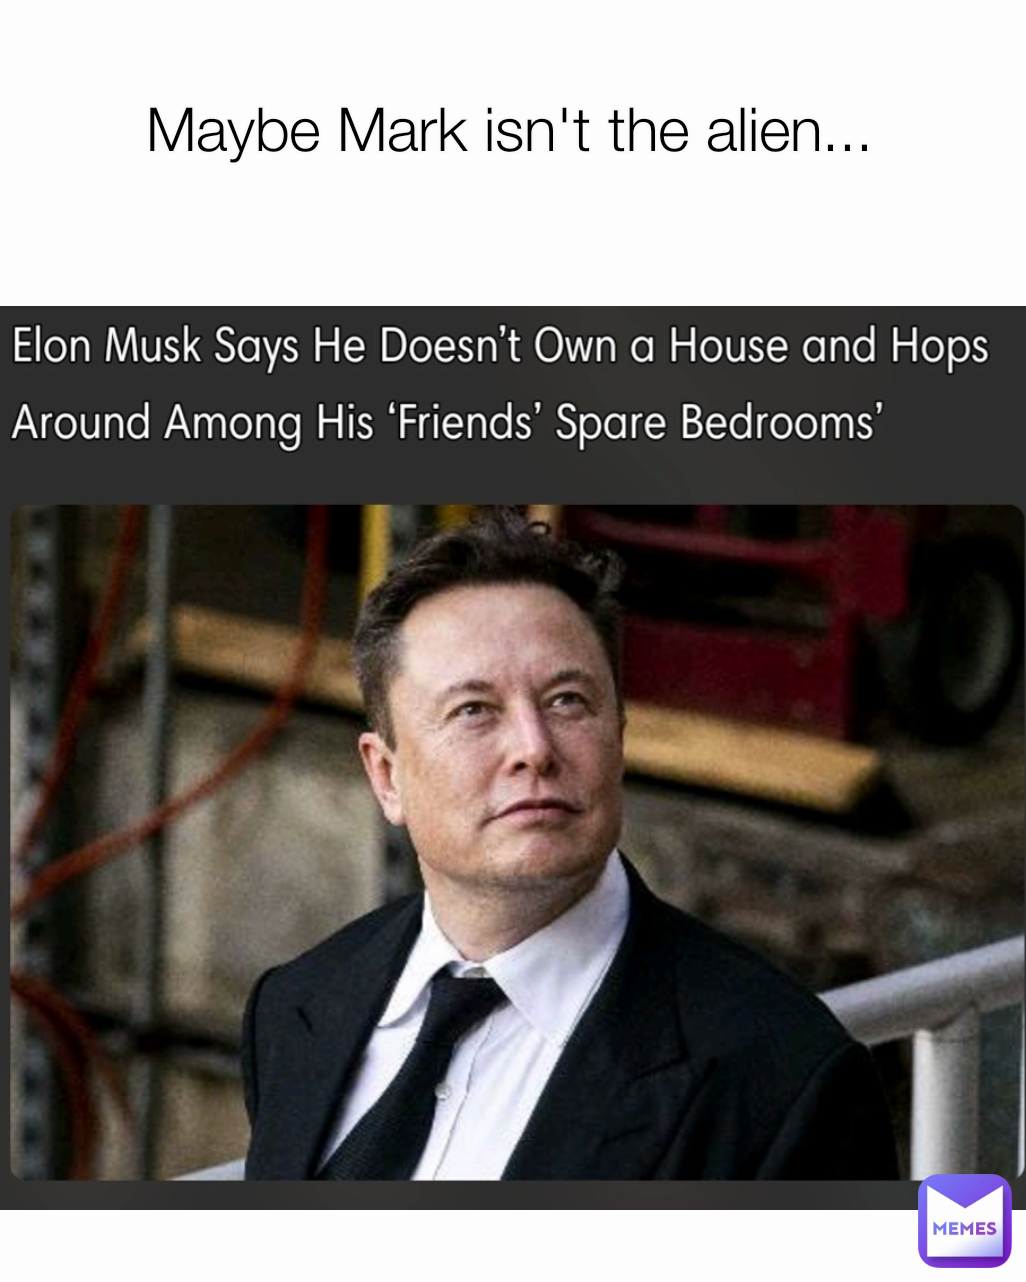 Maybe Mark isn't the alien...